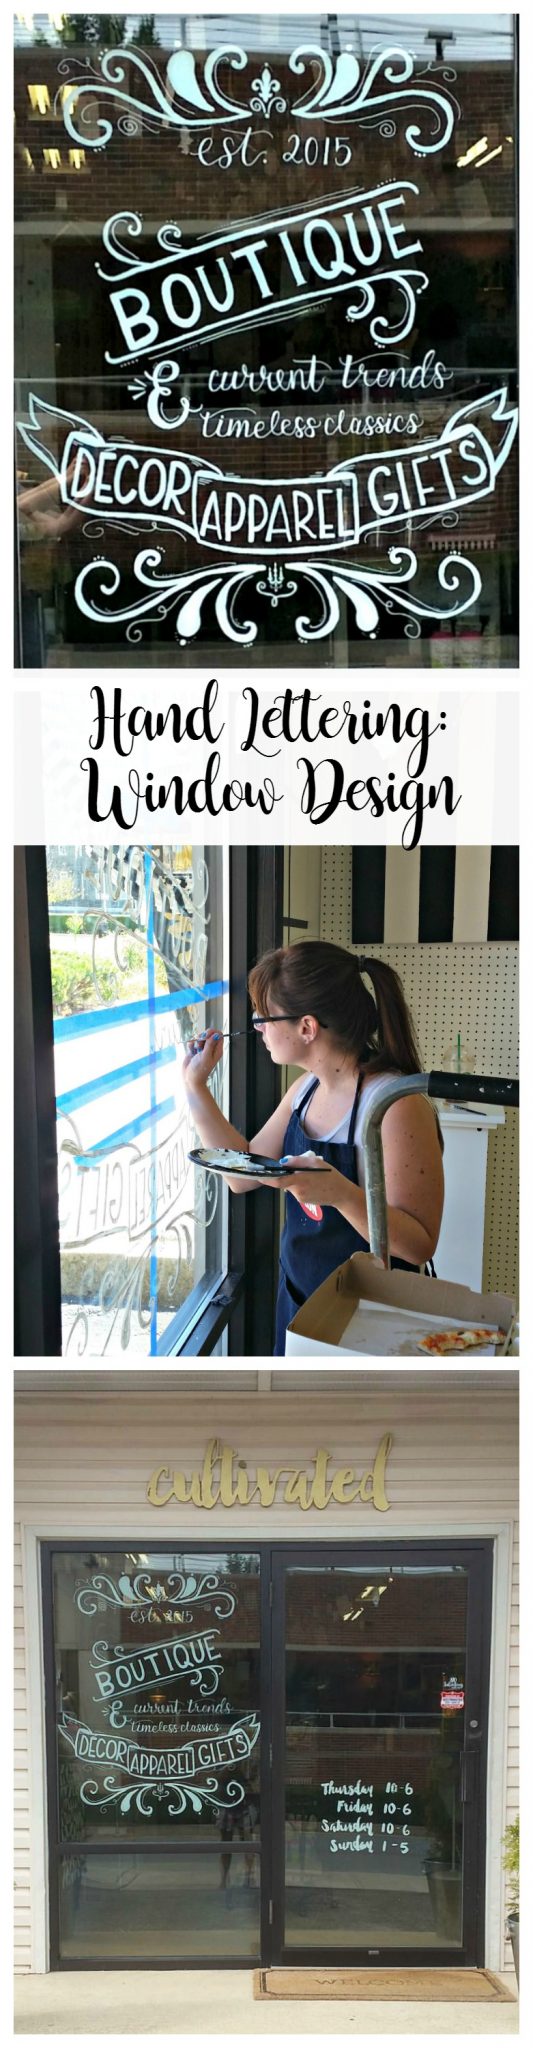 Hand Lettering: Window Design